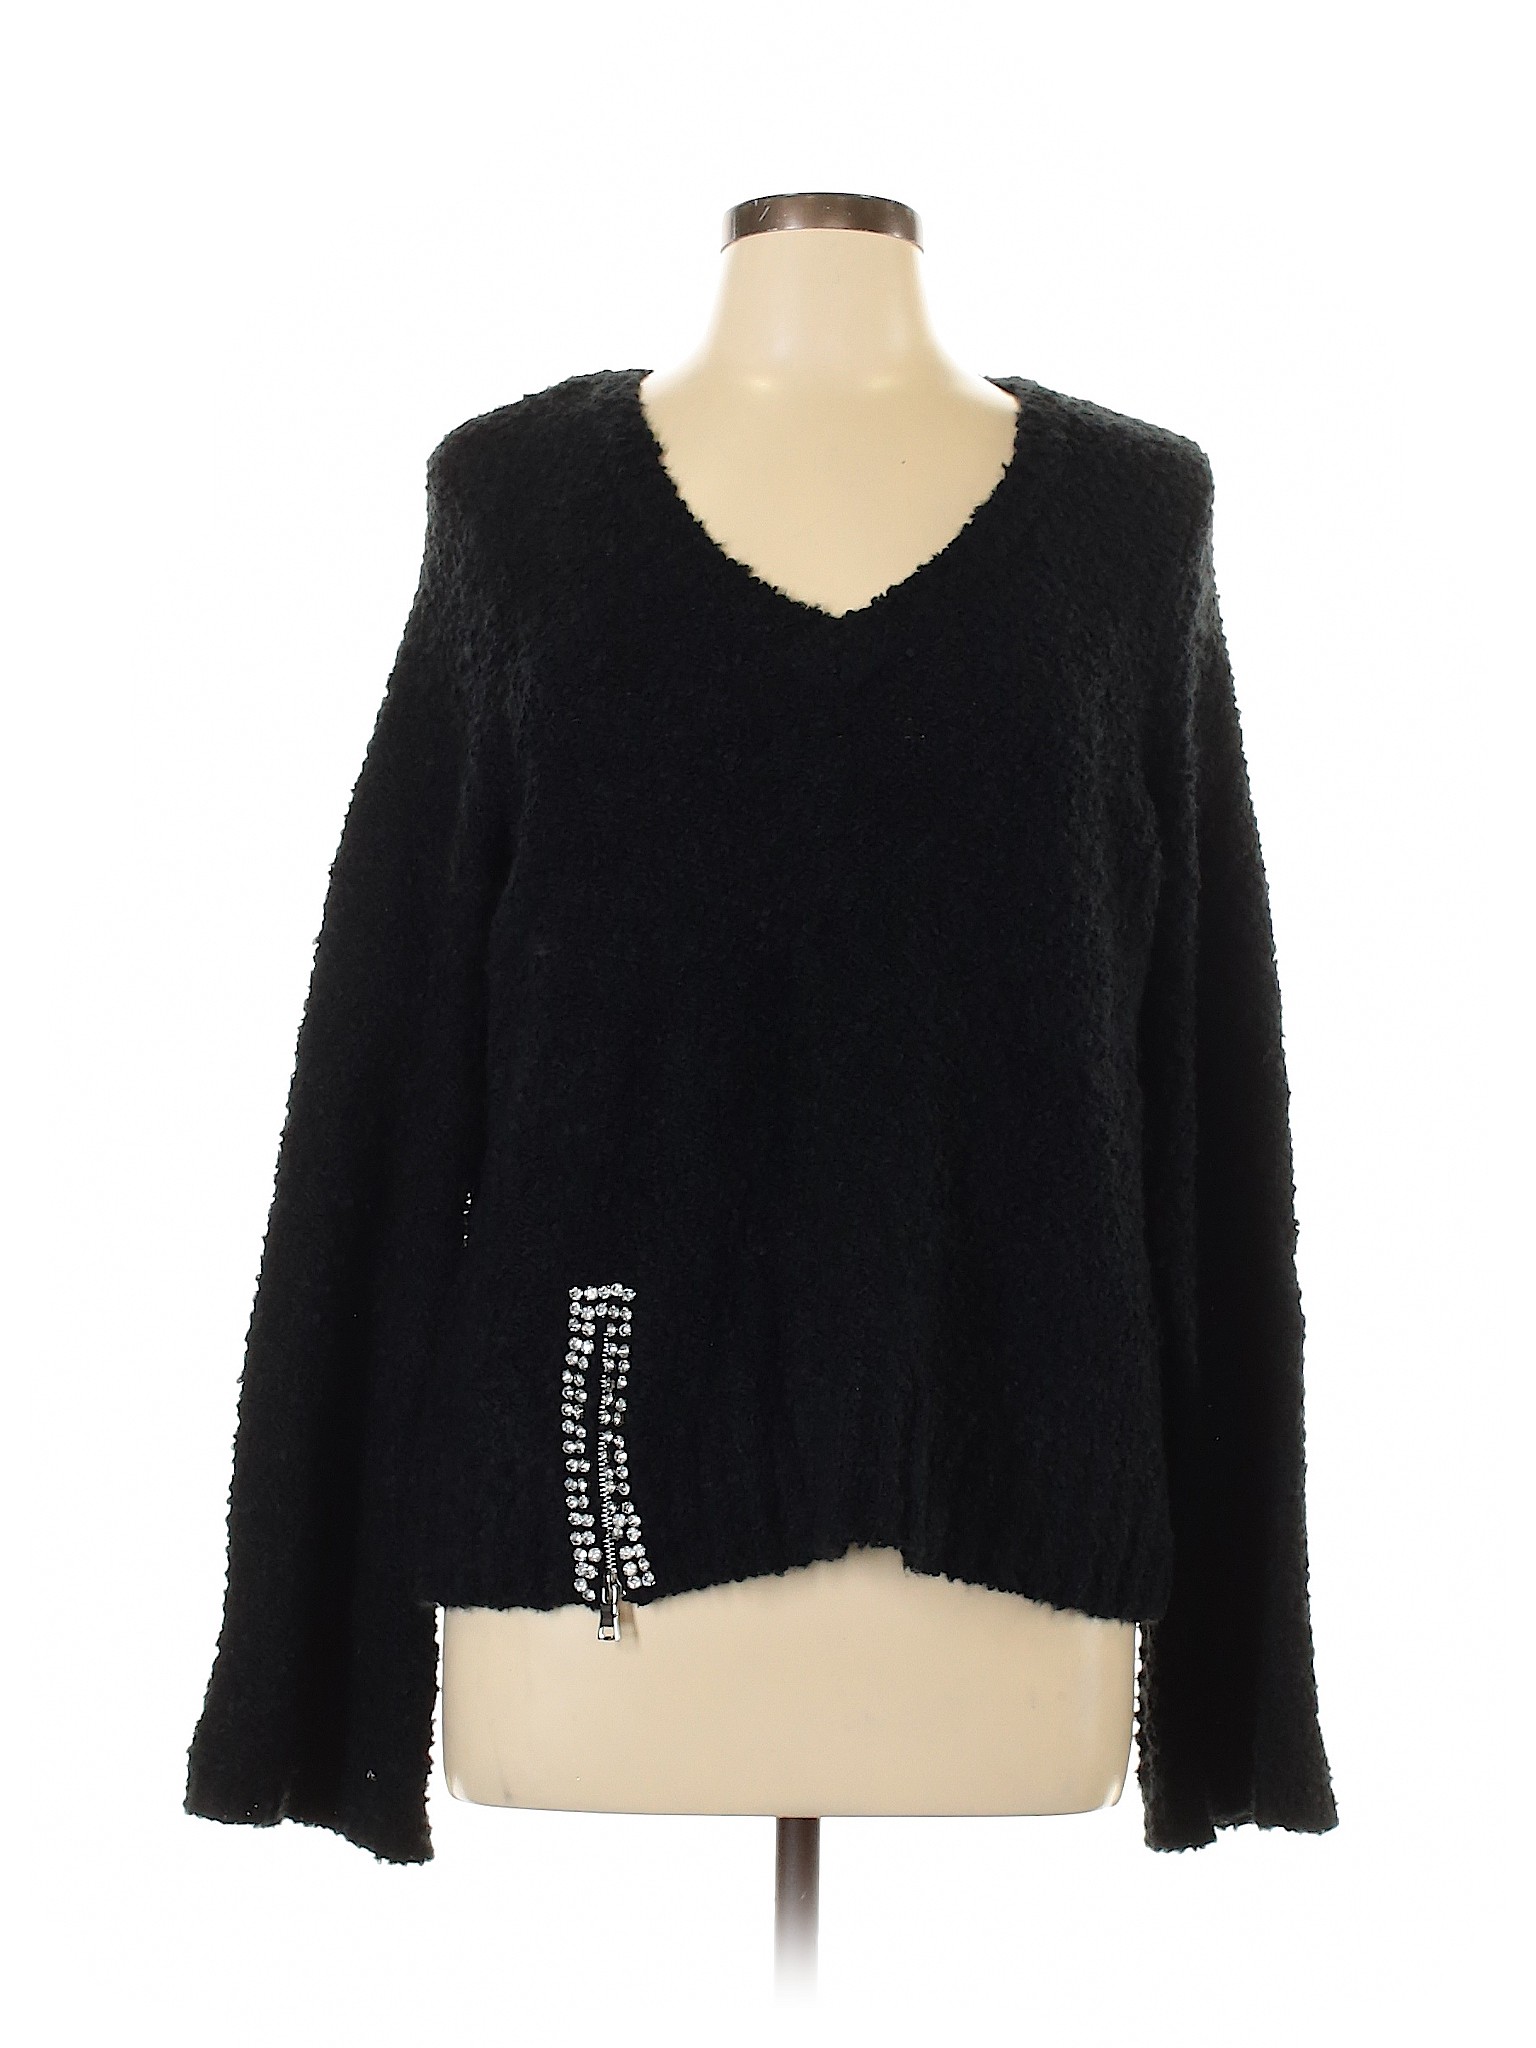 INC International Concepts Women Black Pullover Sweater L | eBay